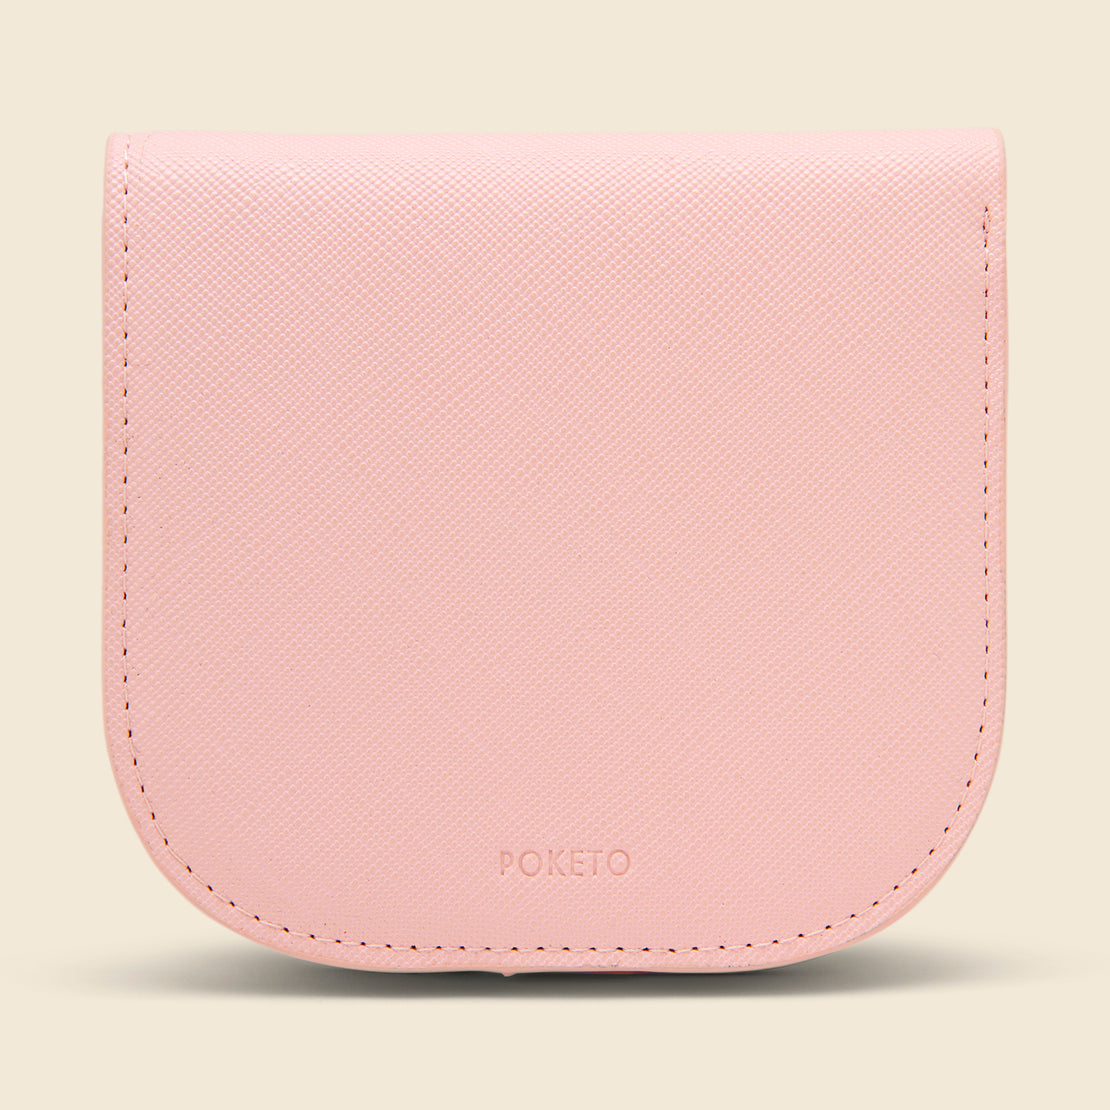 Poketo Dome Wallet - Pink